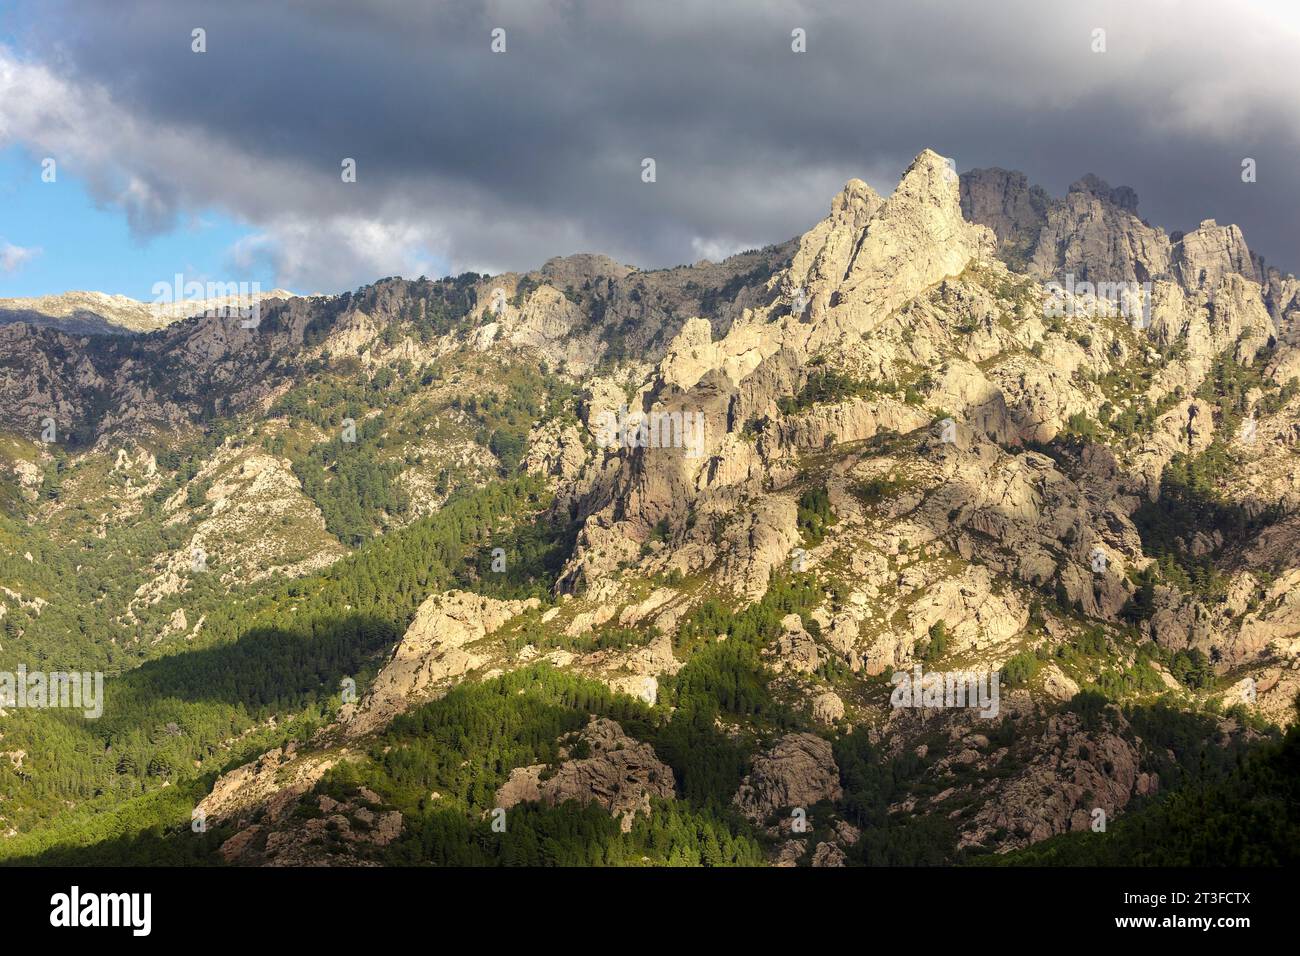 France, Corse du Sud, Quenza, Aiguilles de Bavella (Bavella spines) from Bavella pass and corsica Laricio pine trees (Pinus nigra corsicana) Stock Photo